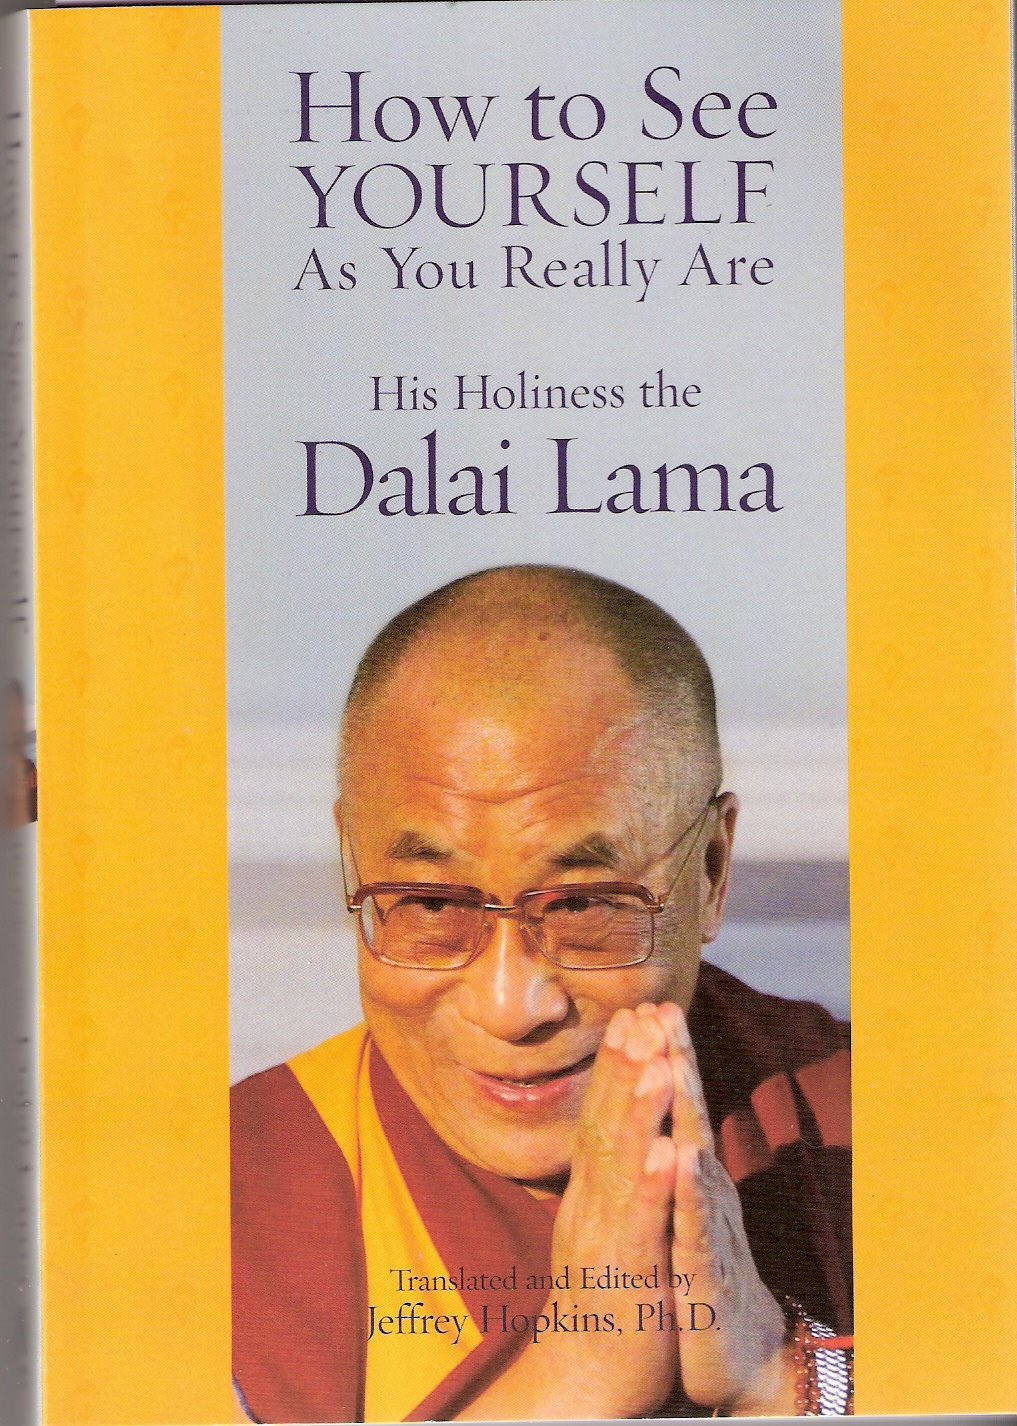 [Dalai+Lama+How+to+See+Yourself.jpg]